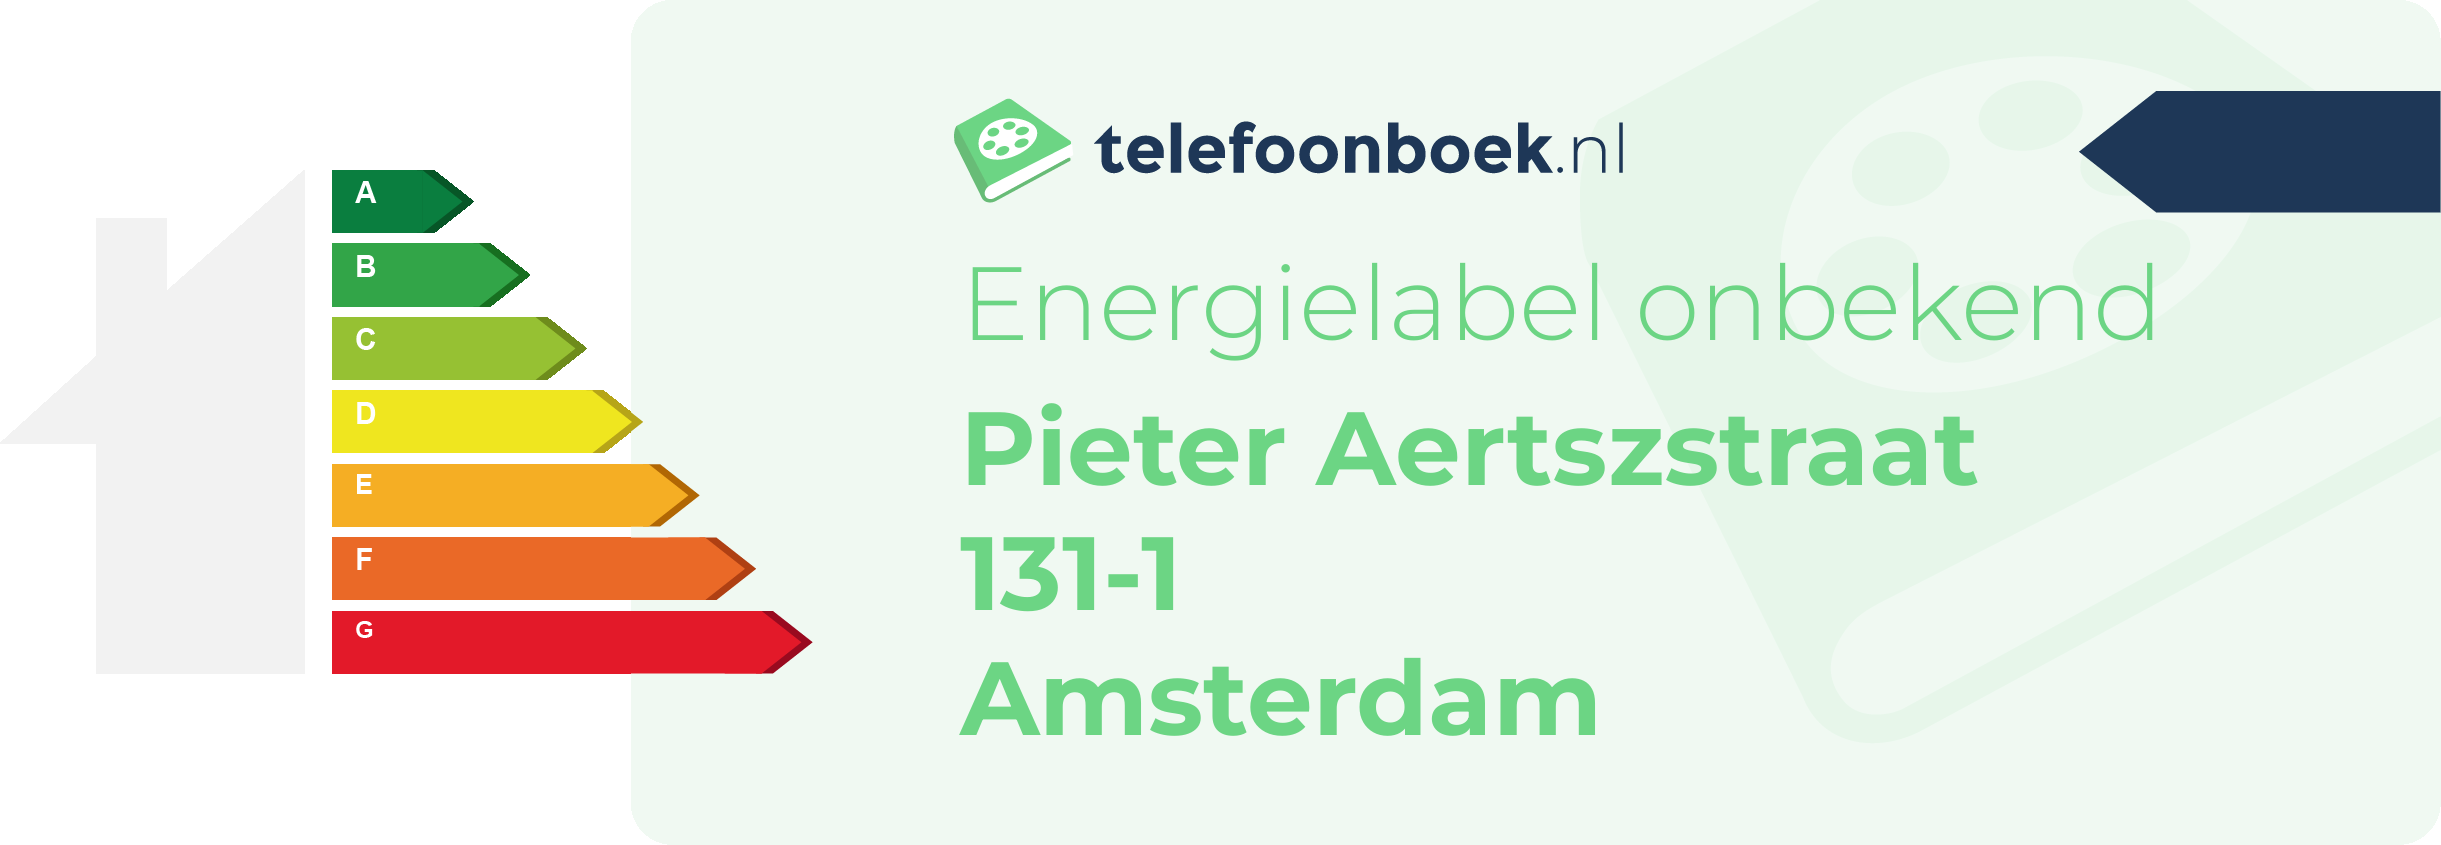 Energielabel Pieter Aertszstraat 131-1 Amsterdam